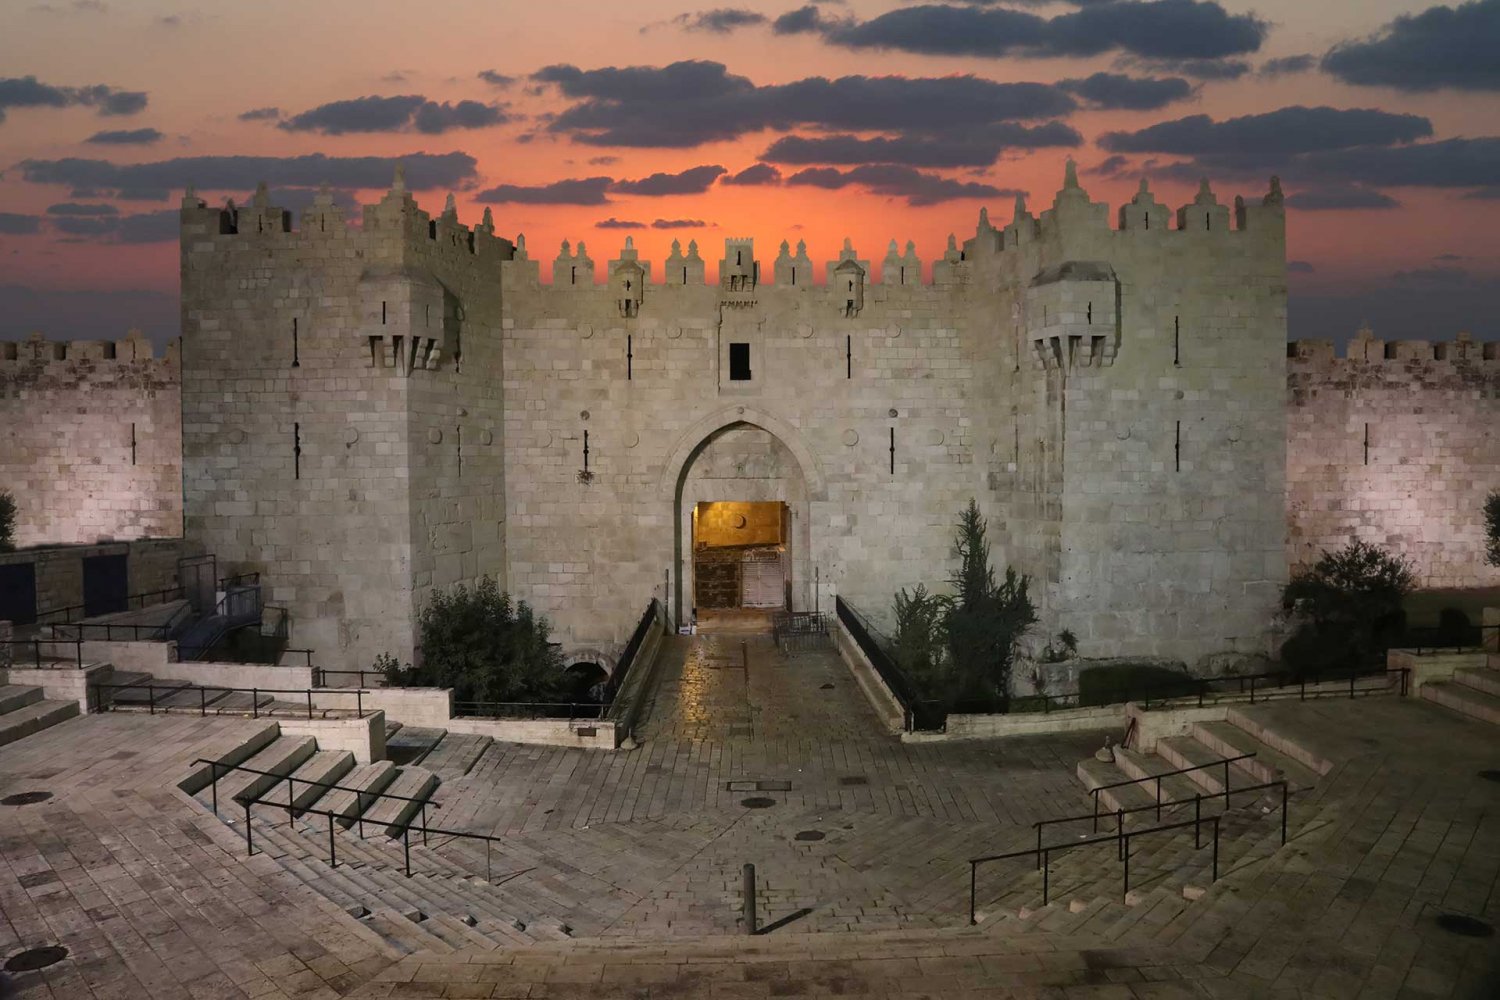 Damascus Gate to Jerusalem’s Old City stands empty at sunset.